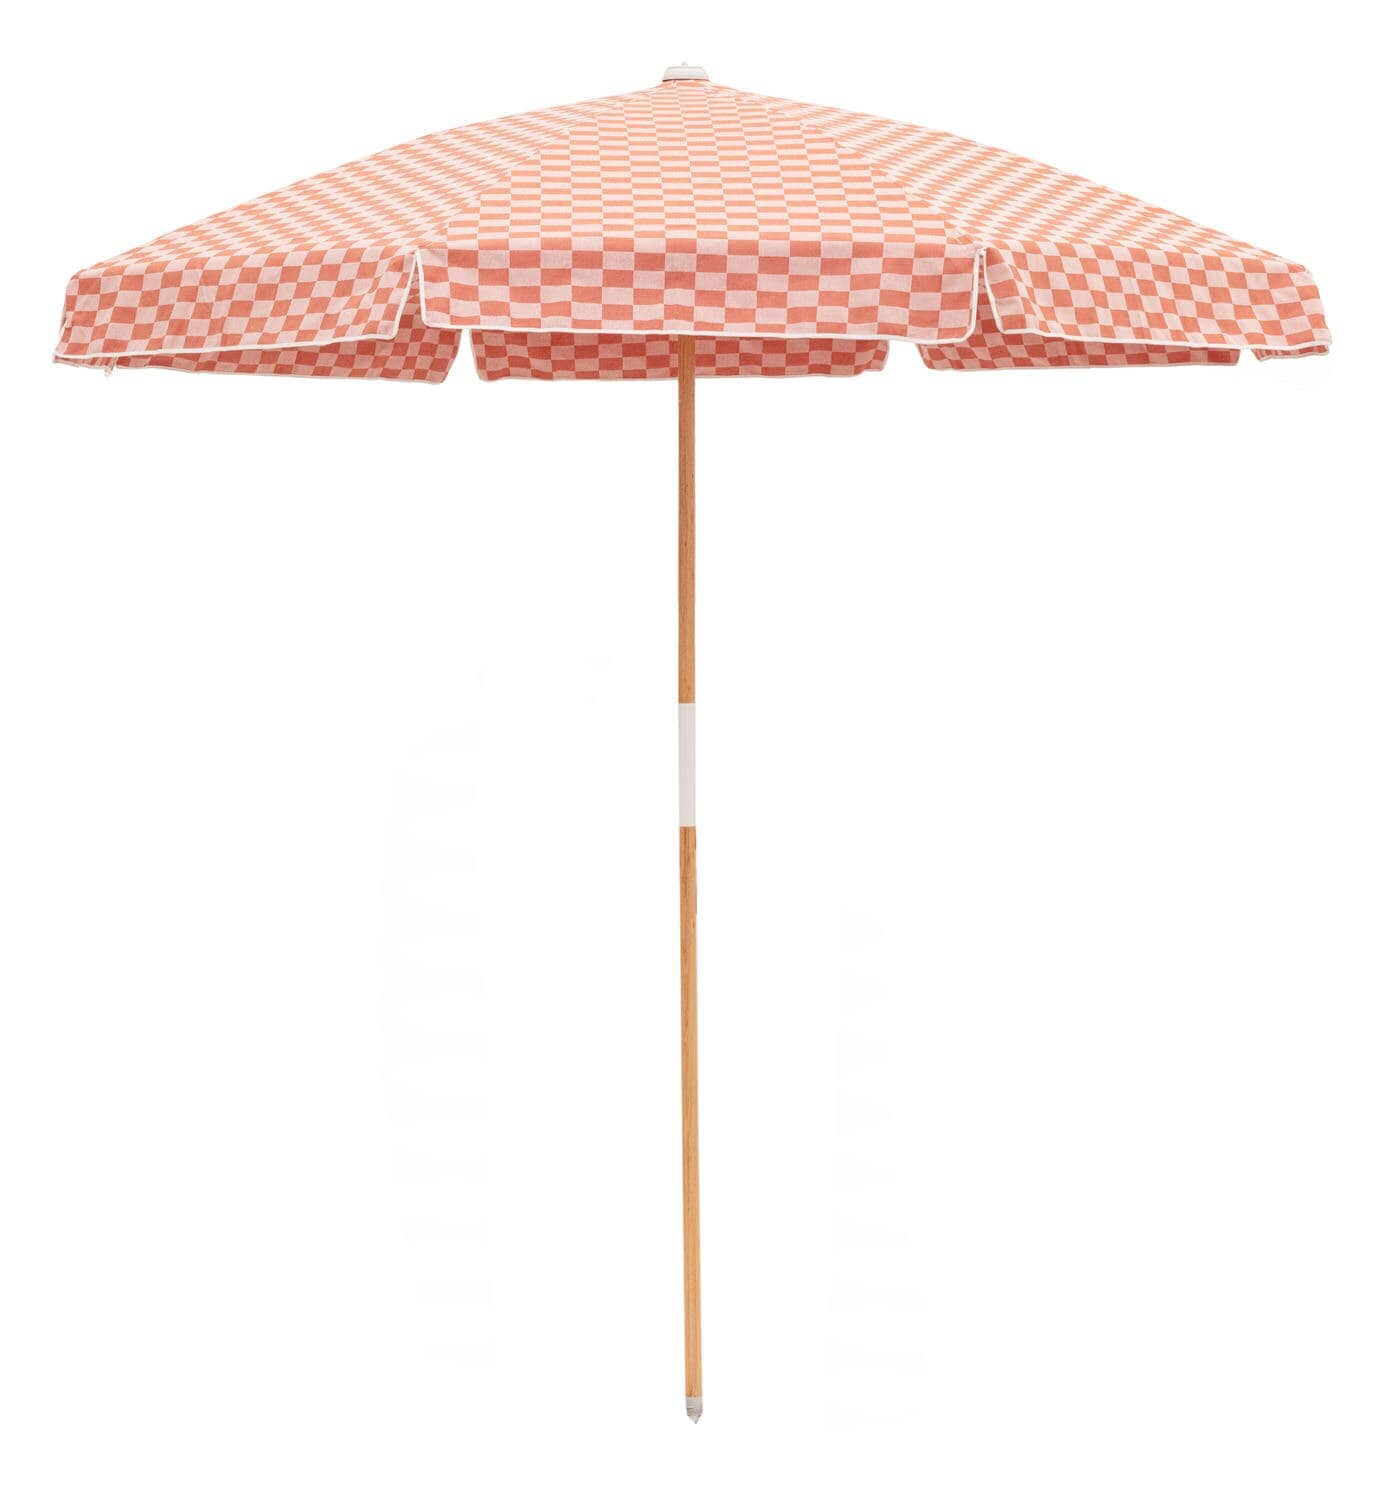 studio image of le sirenuse check amalfi umbrella